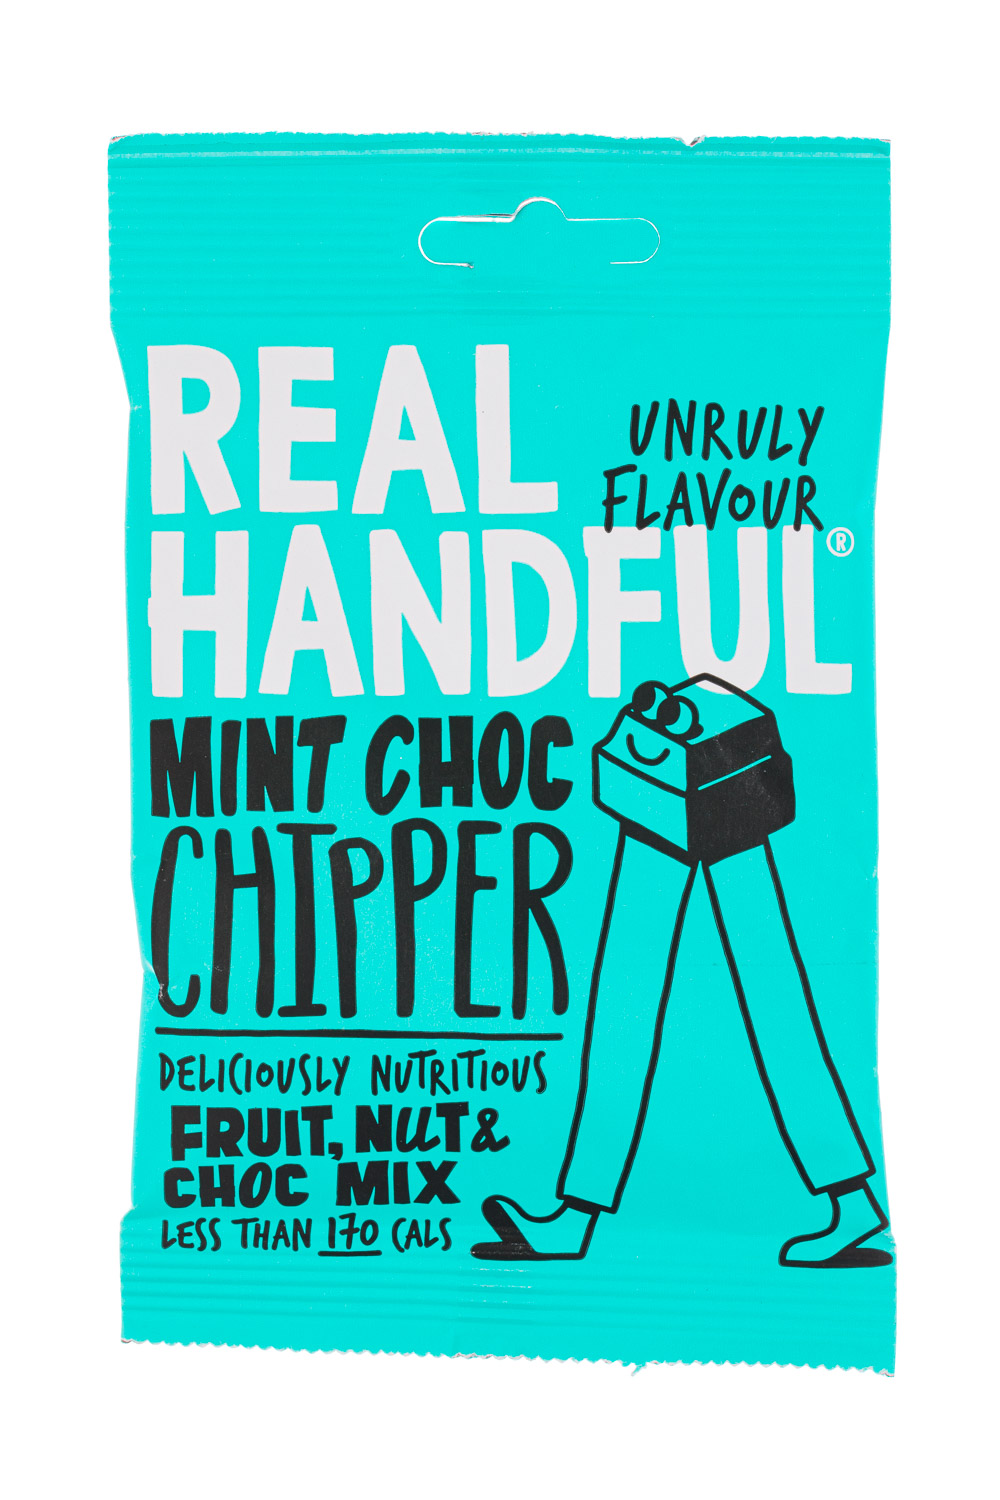 Mint Choc CHIPPER